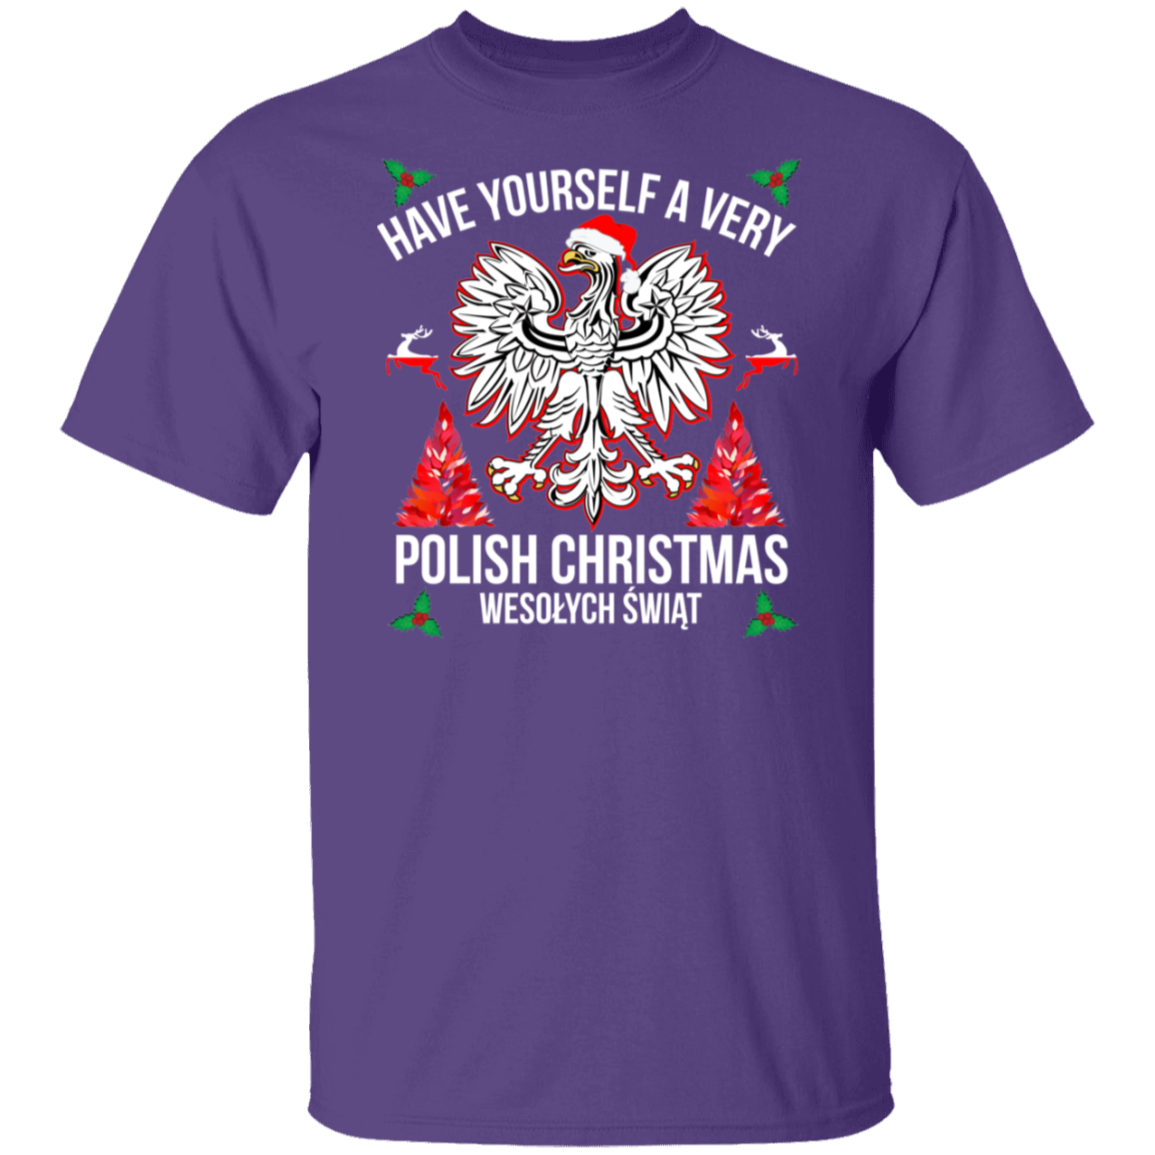 Have Yourself A Very Polish Christmas Apparel CustomCat G500 5.3 oz. T-Shirt Purple S